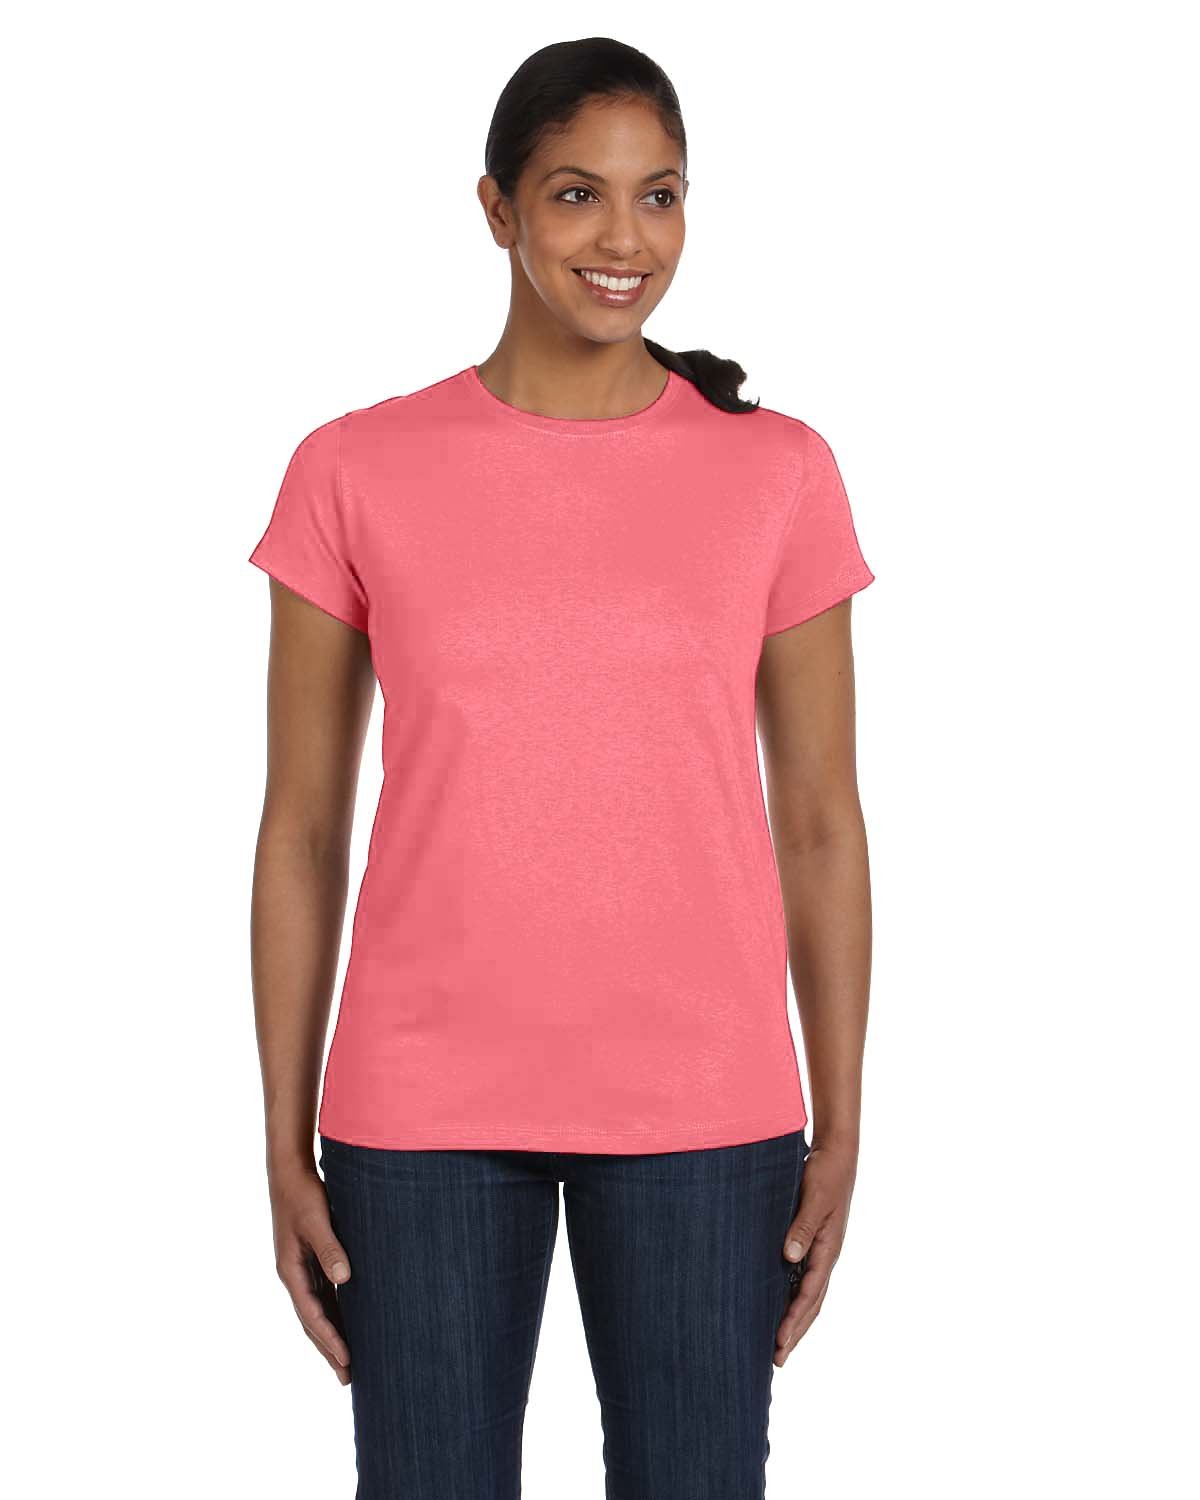 Hanes Ladies' Essential-T T-Shirt CHARISMA CORAL 